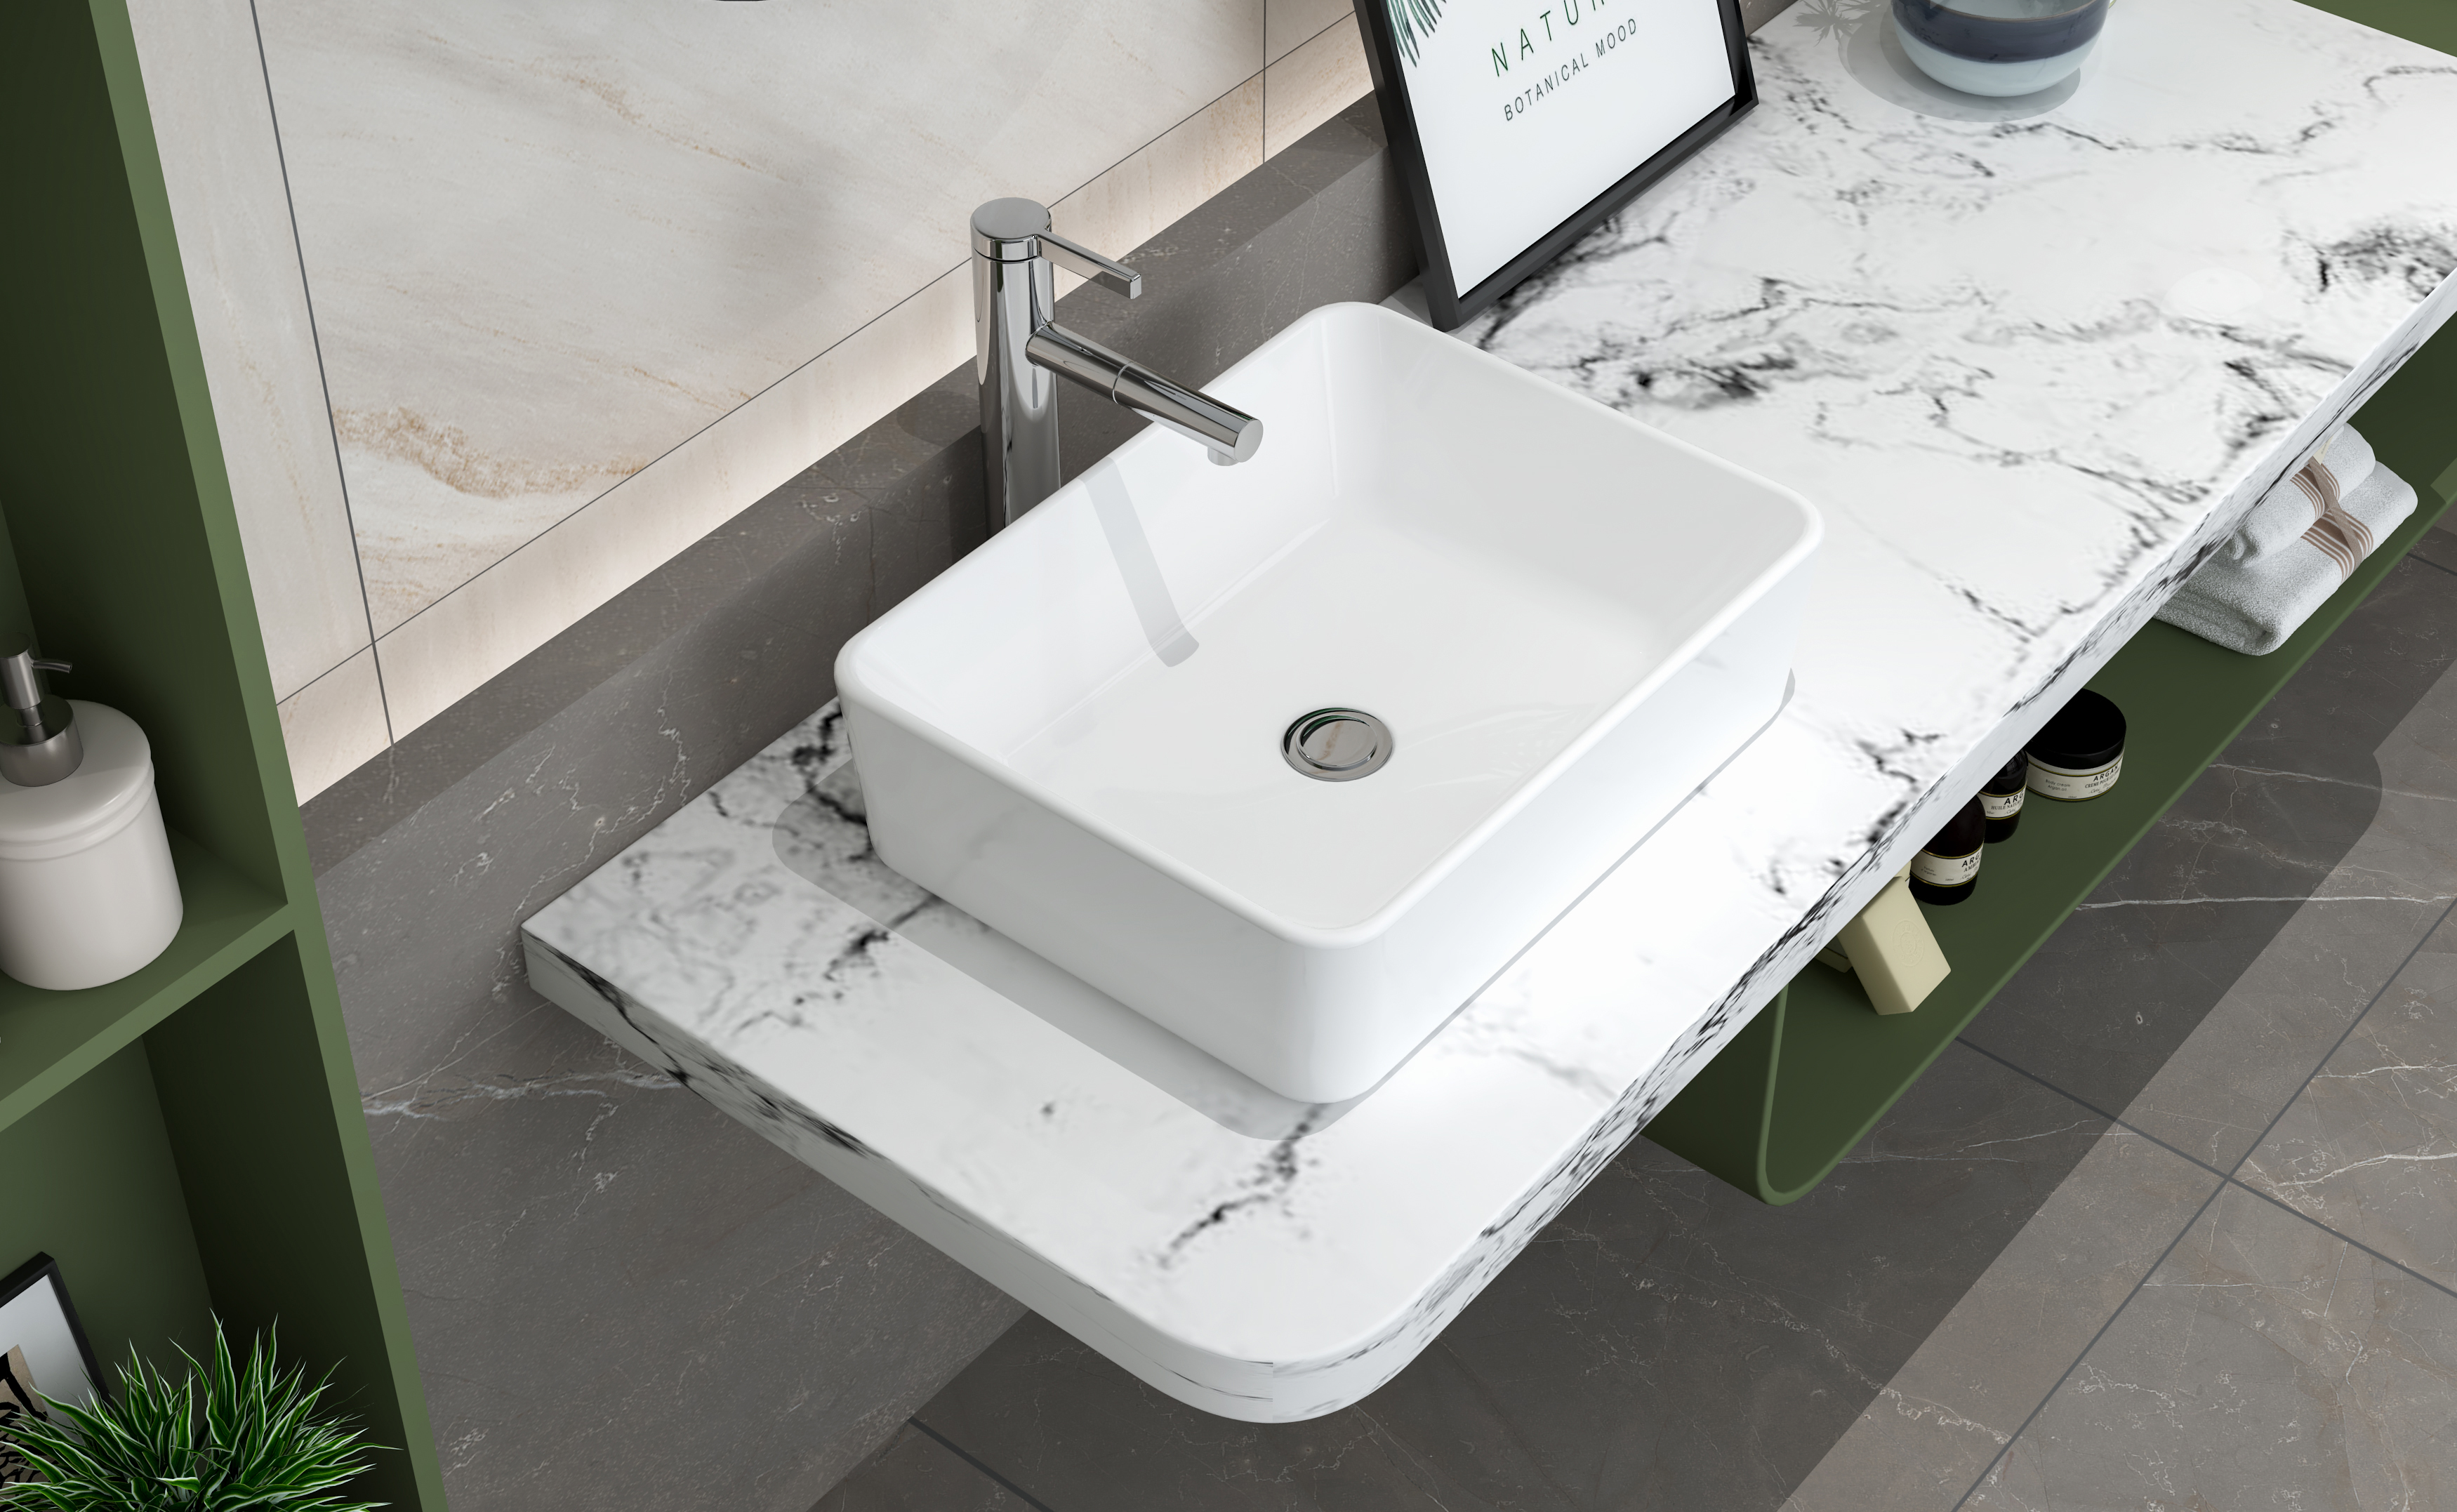 MEJE 19×15-Inch Bathroom Vessel Sink,White Rectangle Above Counter Countertop Vanity Sink,Porcelain Ceramic Art Basin,Wash Basin for Lavatory Vanity Cabinet